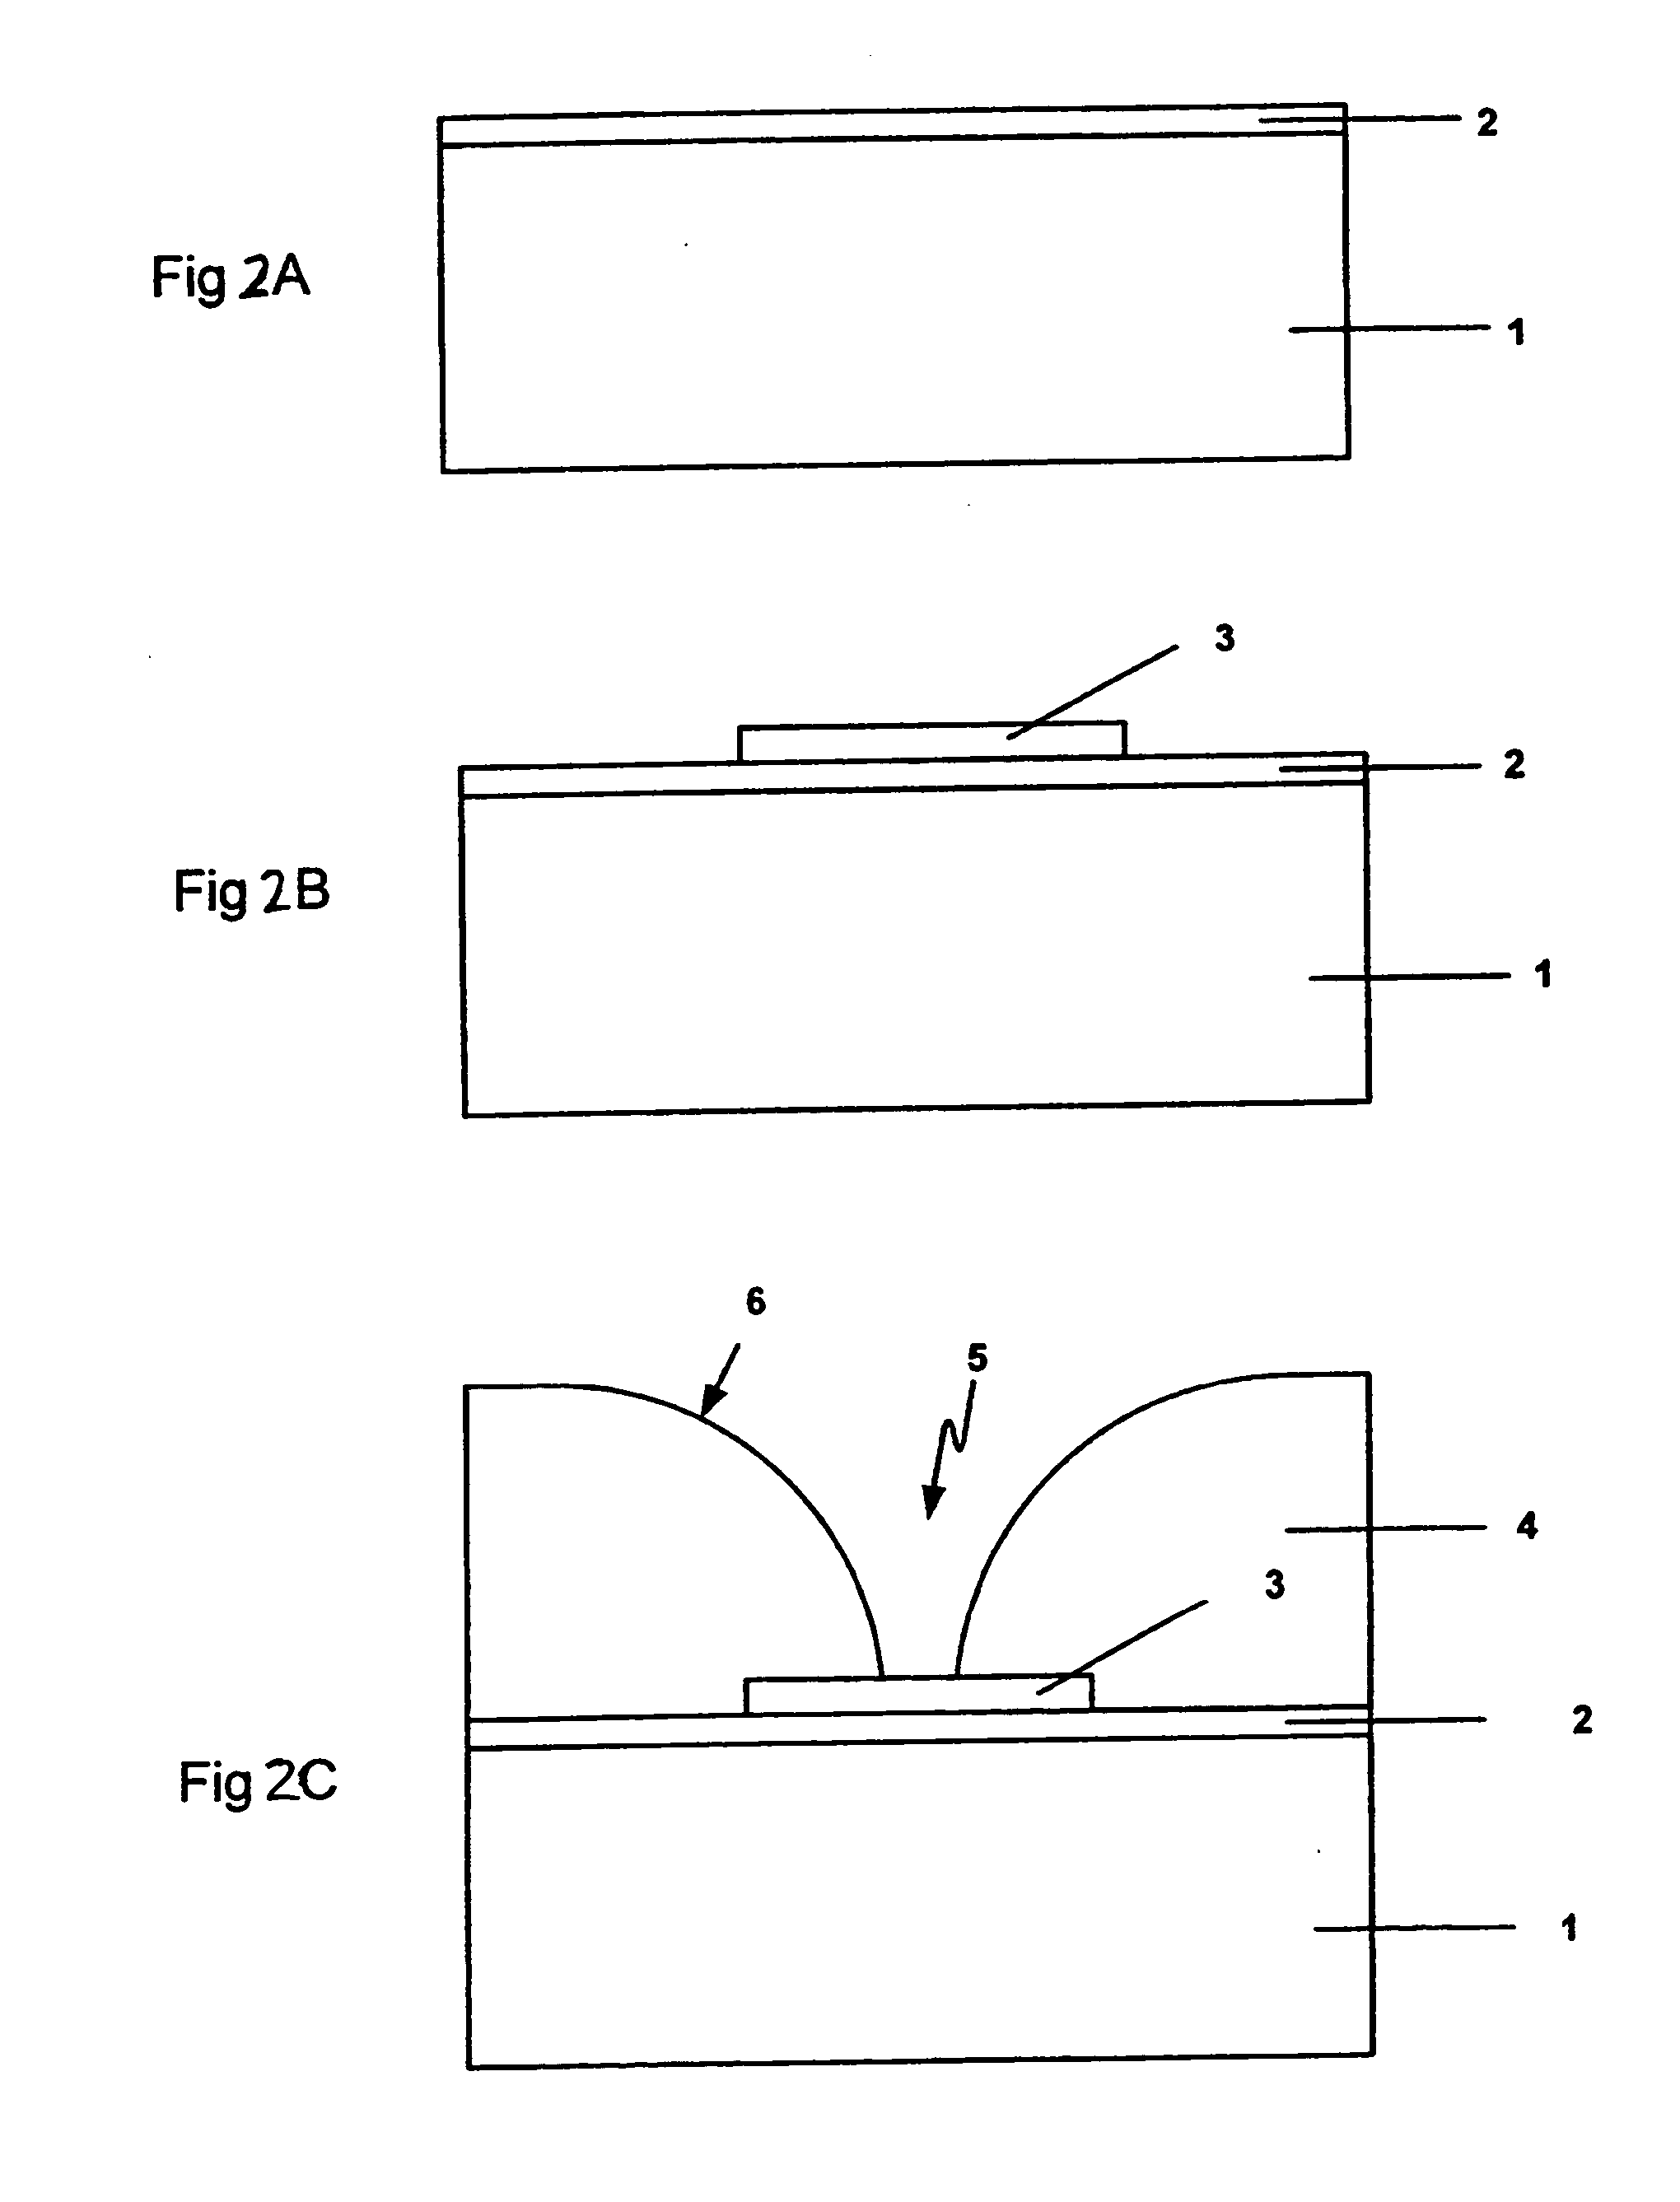 Method of fabricating microneedles